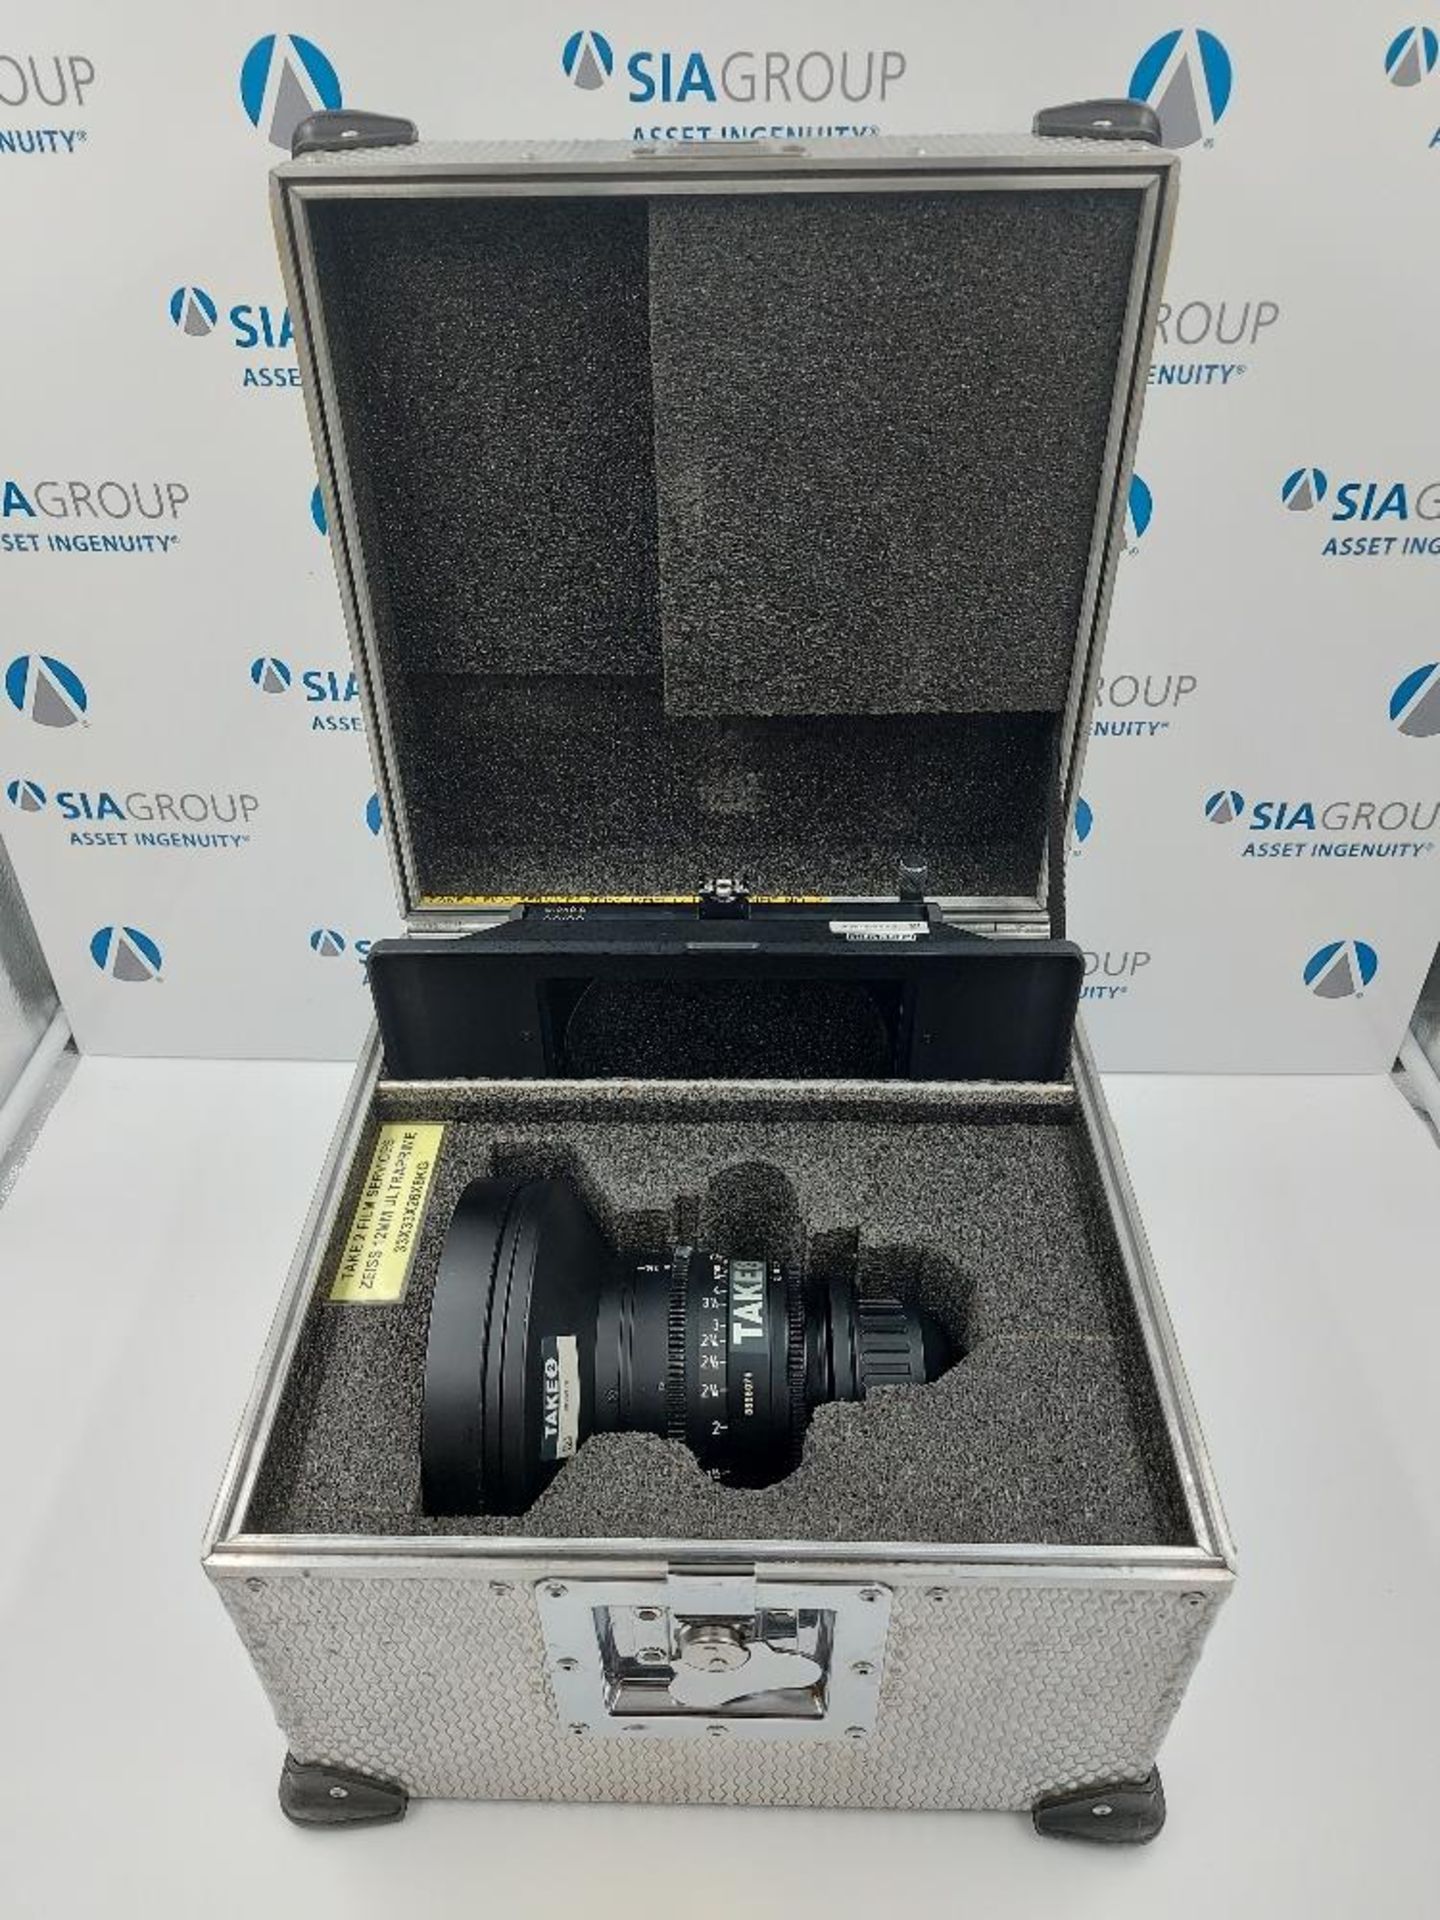 ARRI 12mm T2 S35 Ultra Prime PL Mount Lens Kit - Image 9 of 9